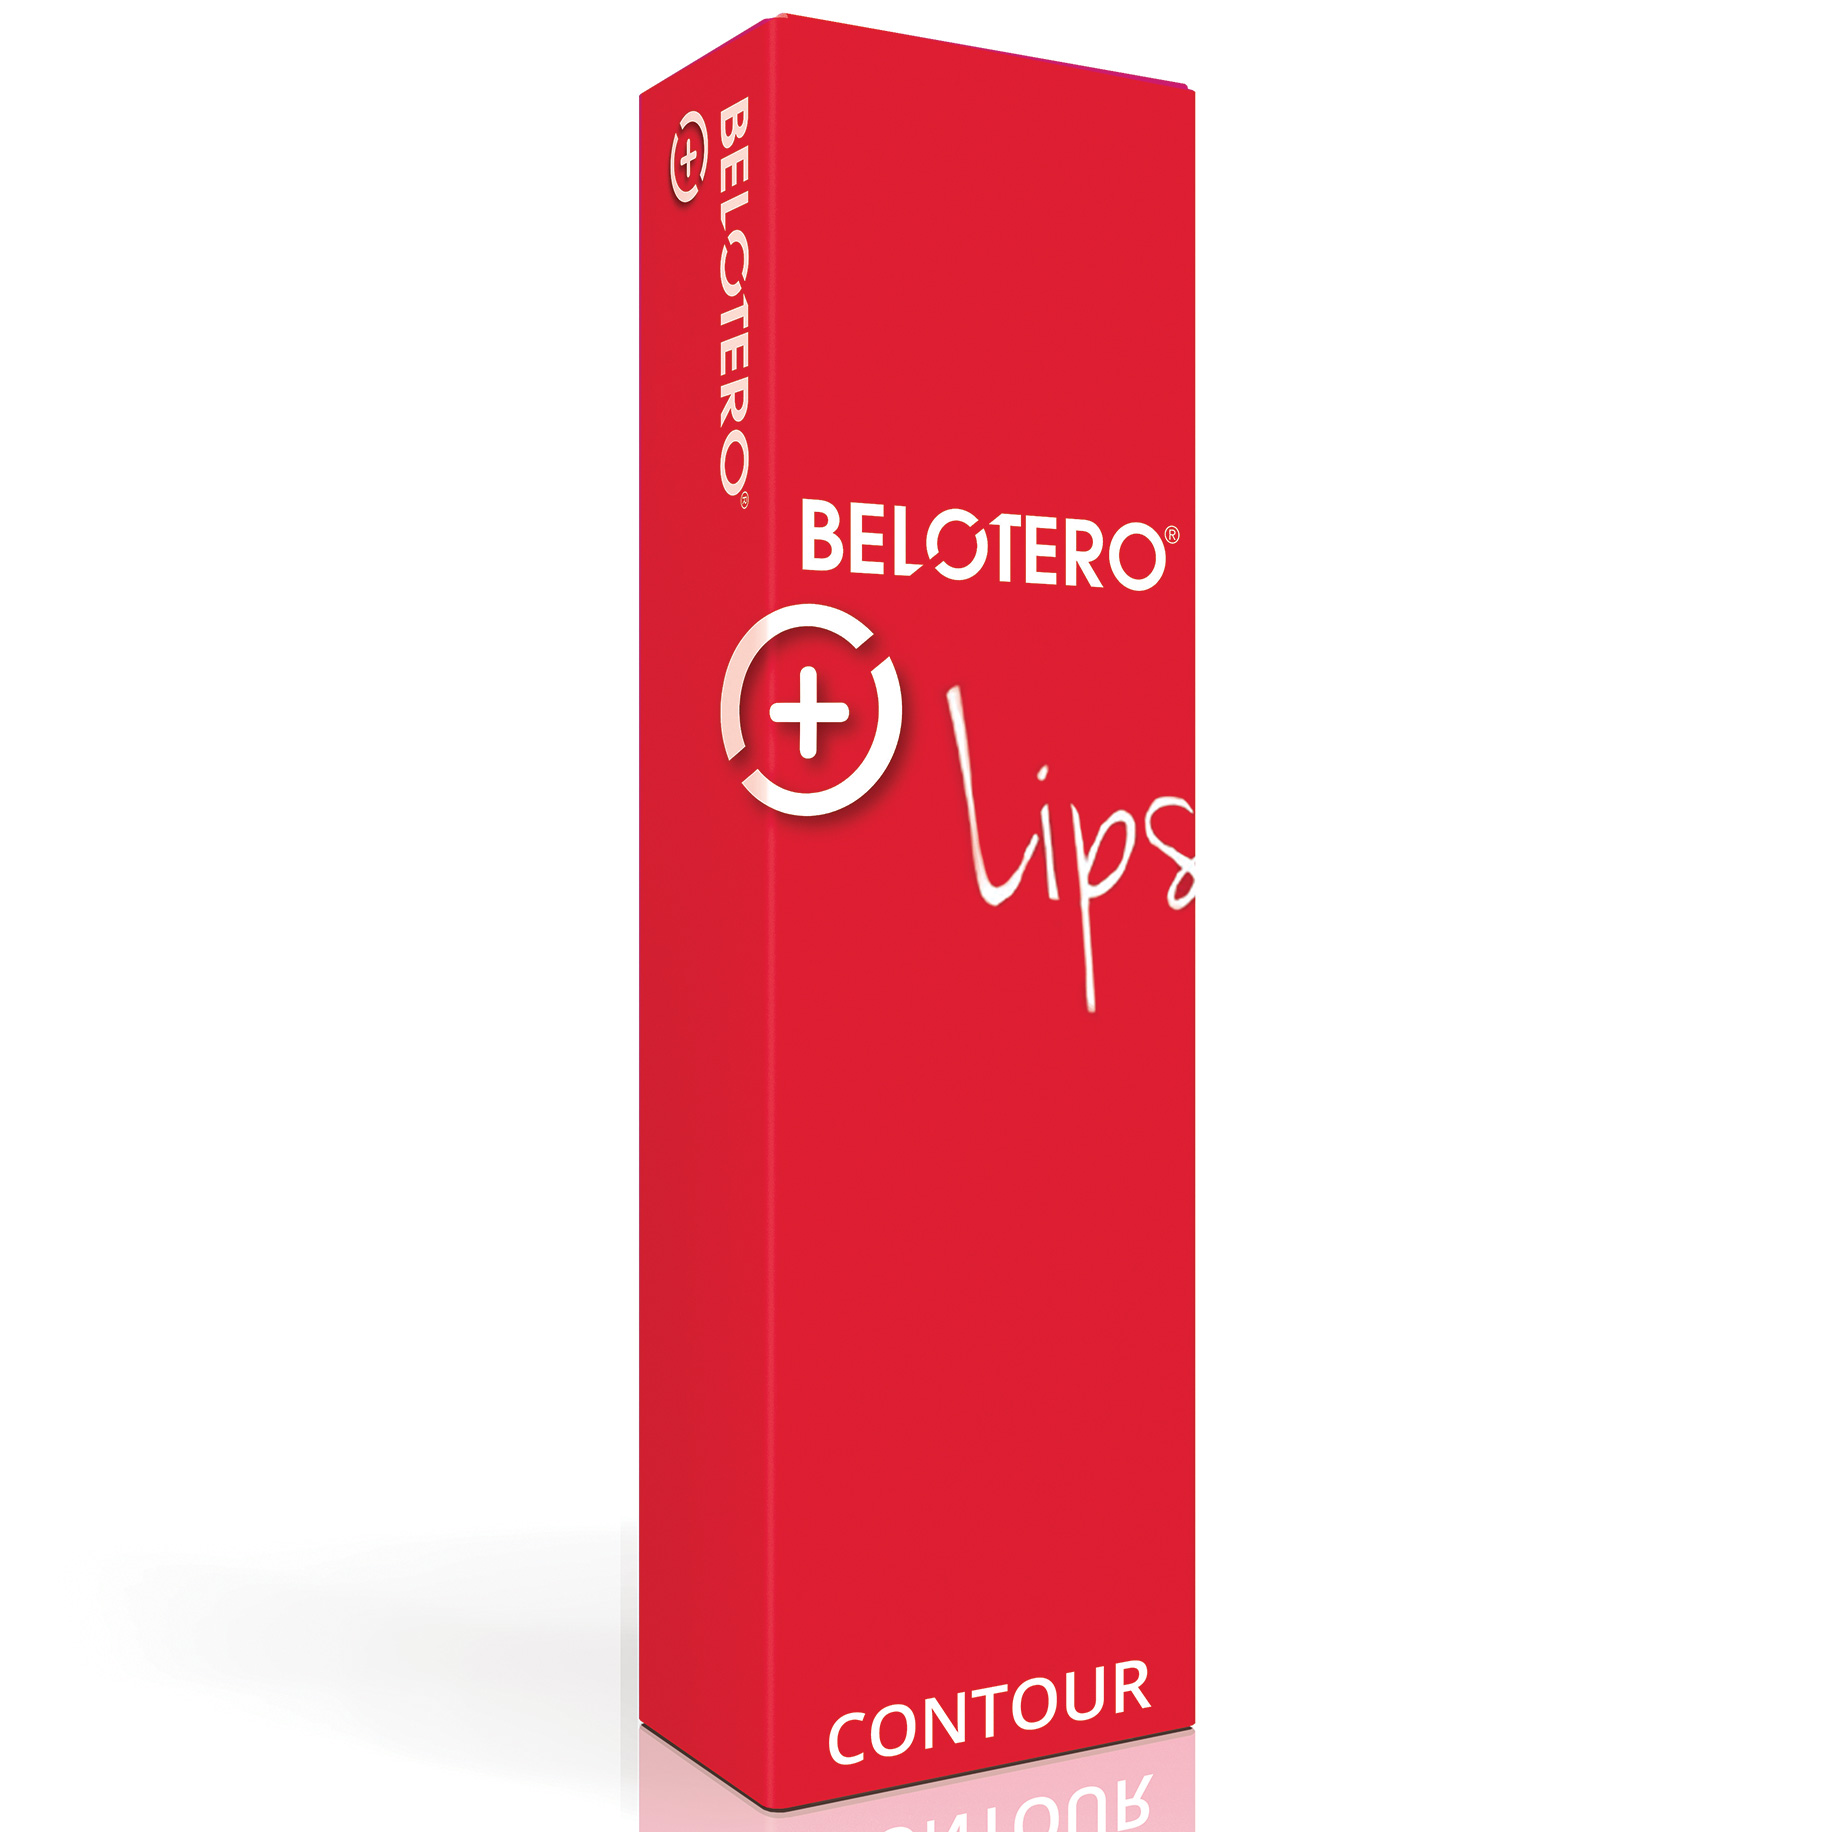 Belotero+ Lips Contour 